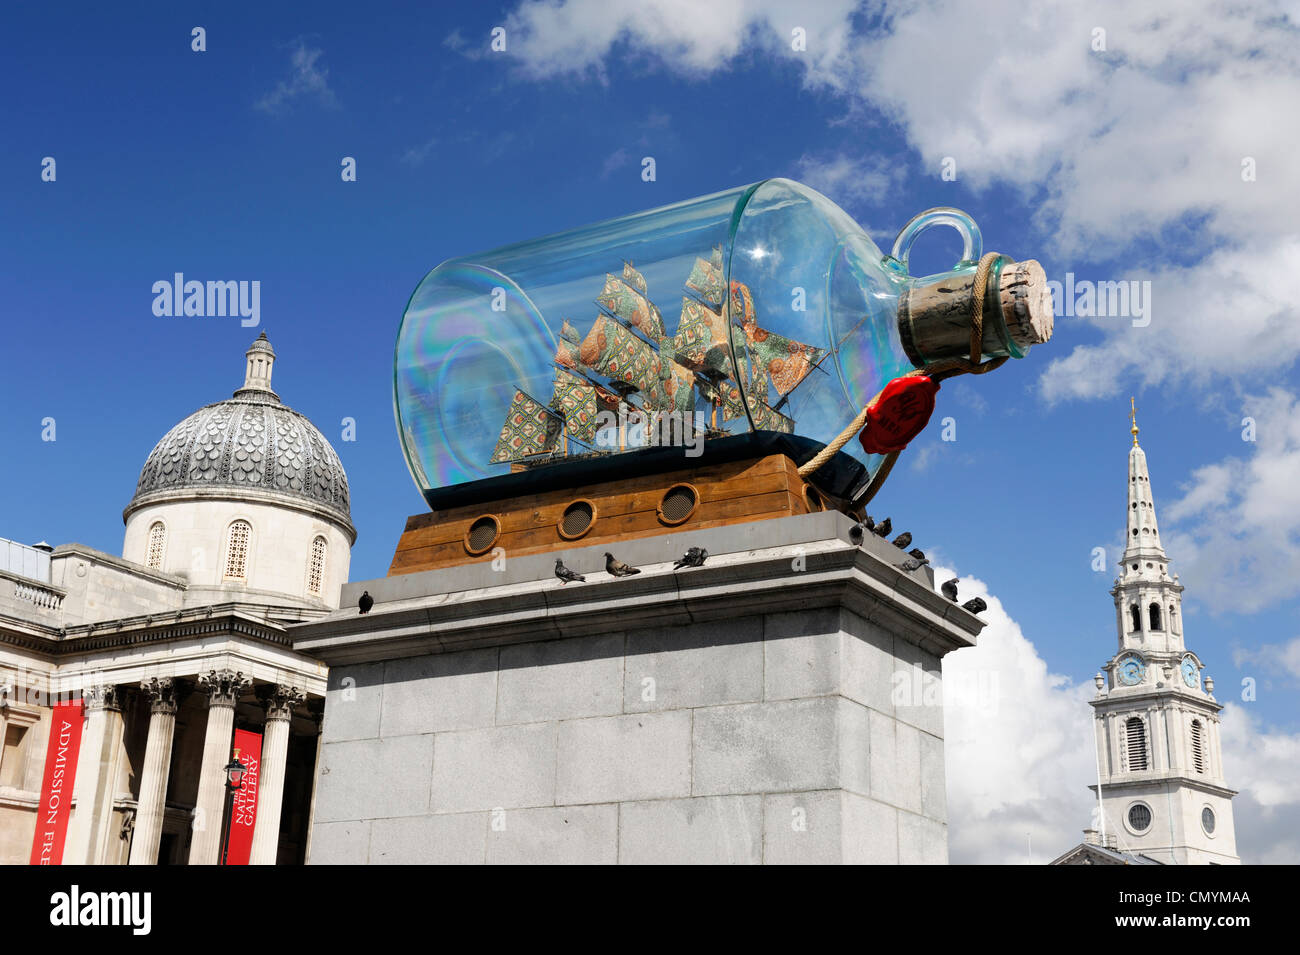 United Kingdom, London, Trafalgar Square, Admiral Nelson's ship in a bottle artwork by artist Yinka Shonibare Stock Photo